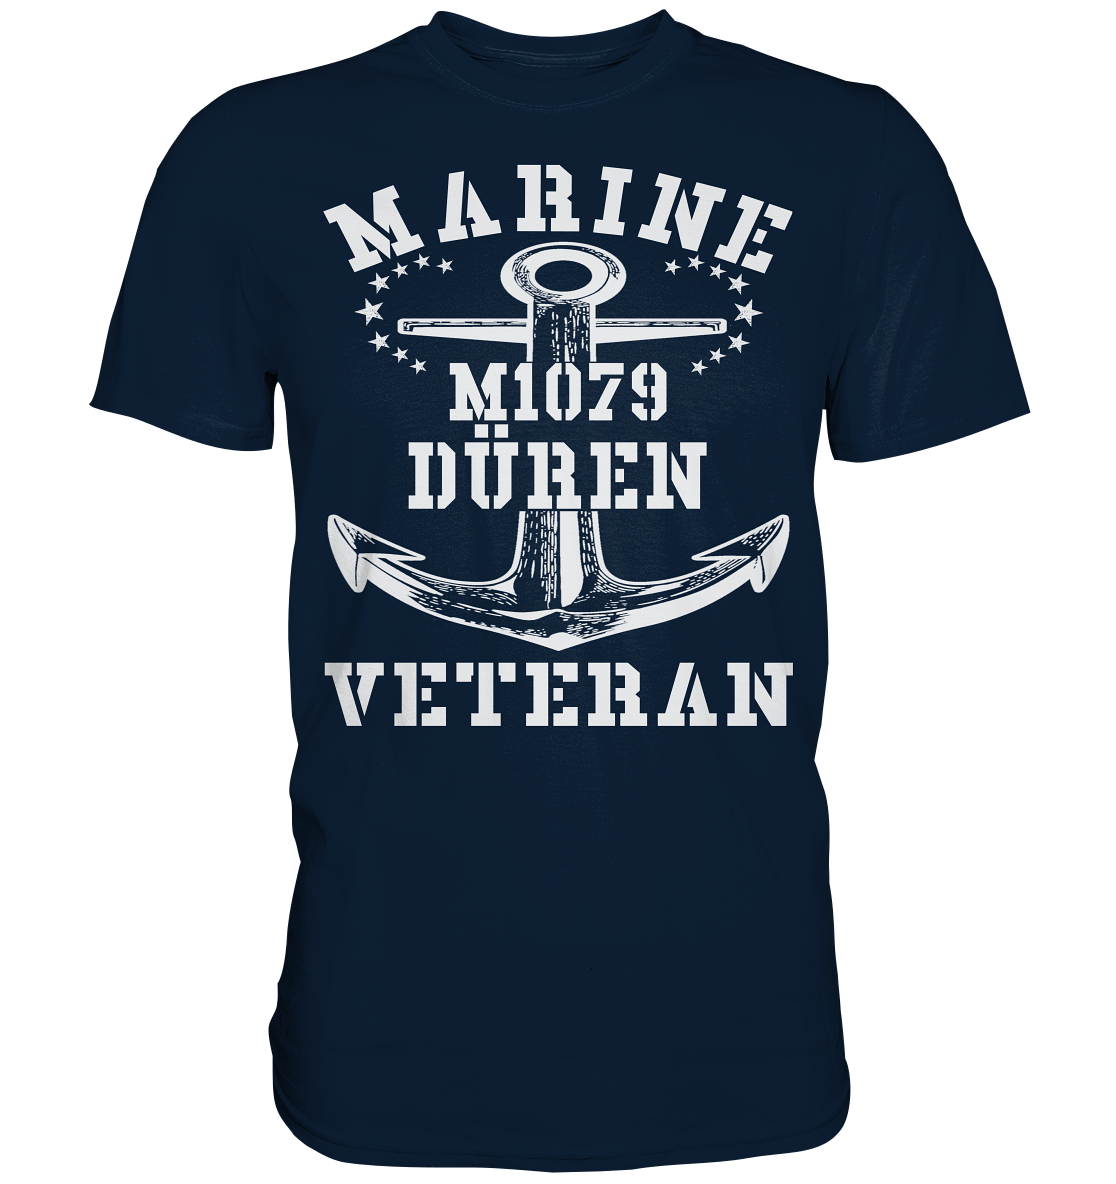 MARINE VETERAN M1079 DÜREN - Premium Shirt